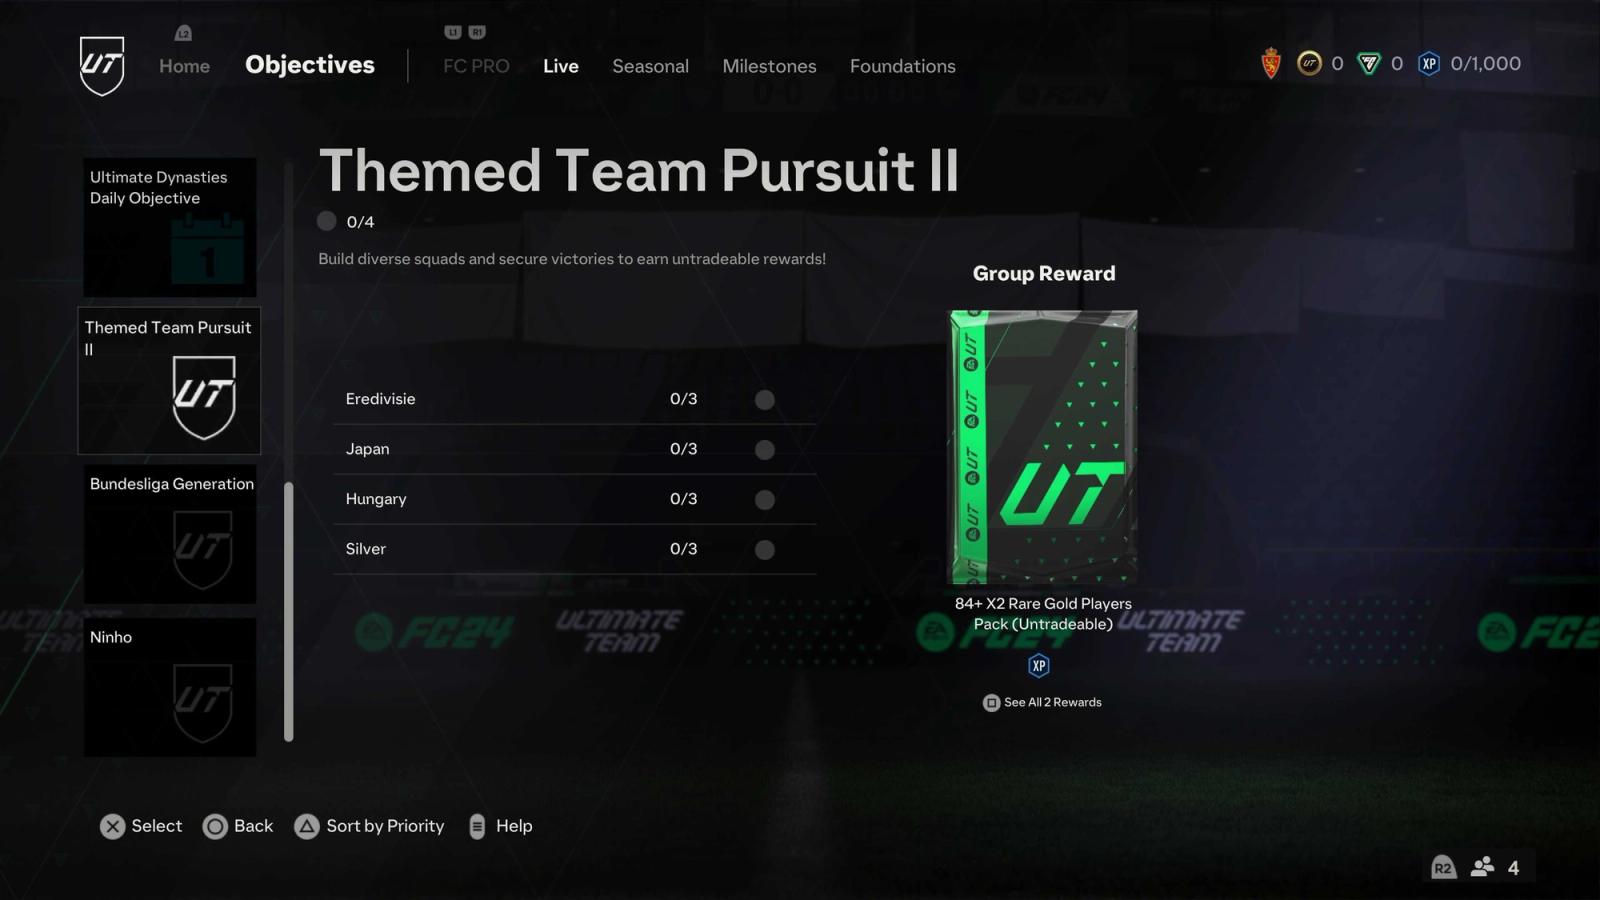 Themed Team Pursuit II FC 24